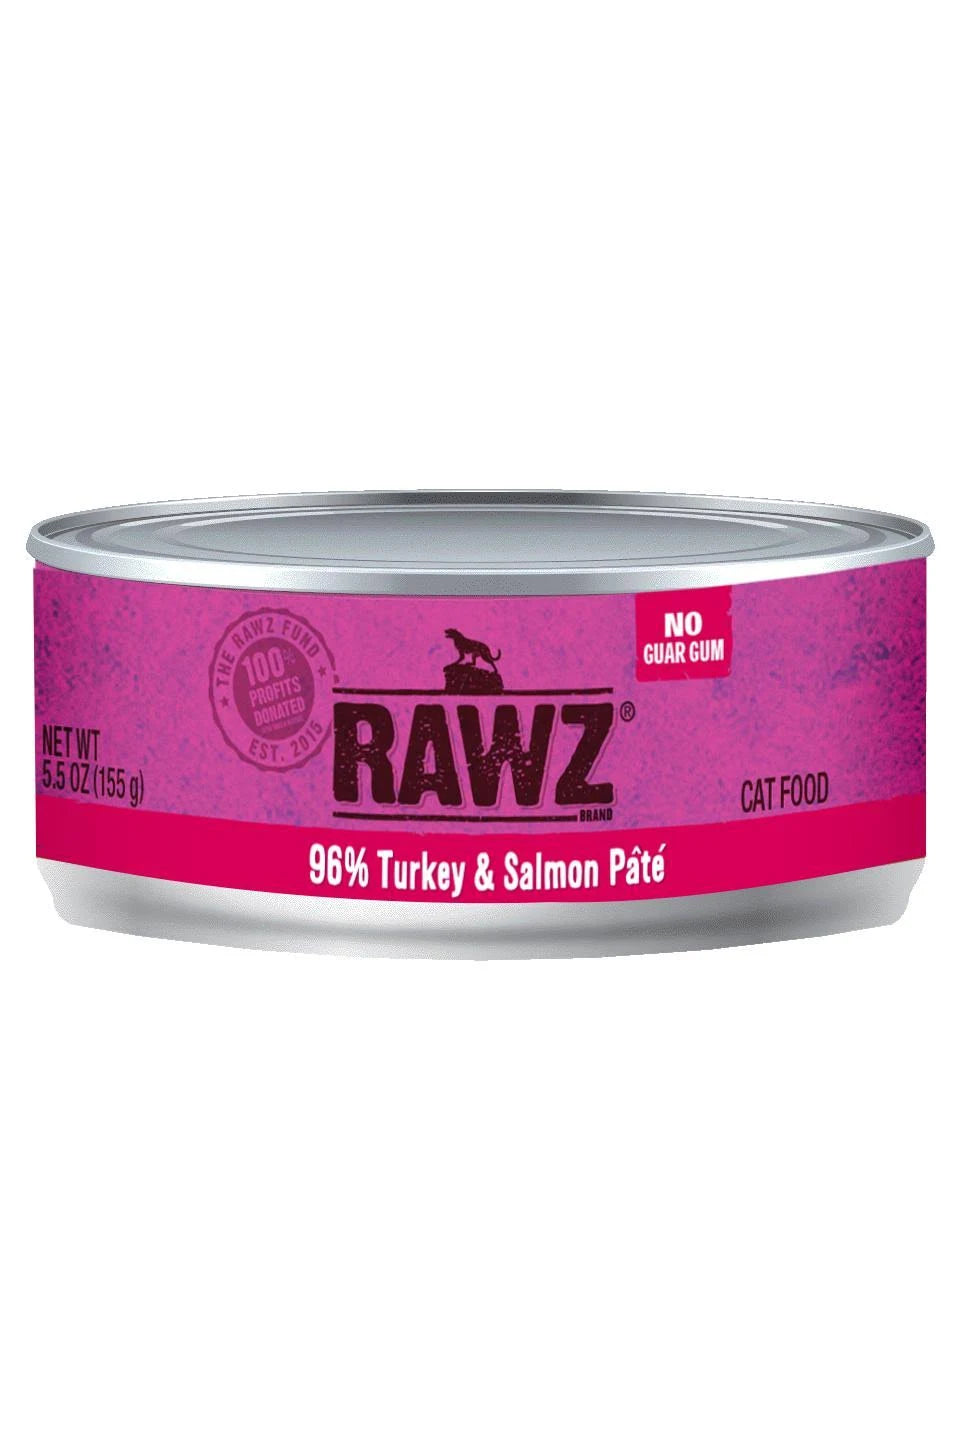 RAWZ 96% Turkey & Salmon Cat Can